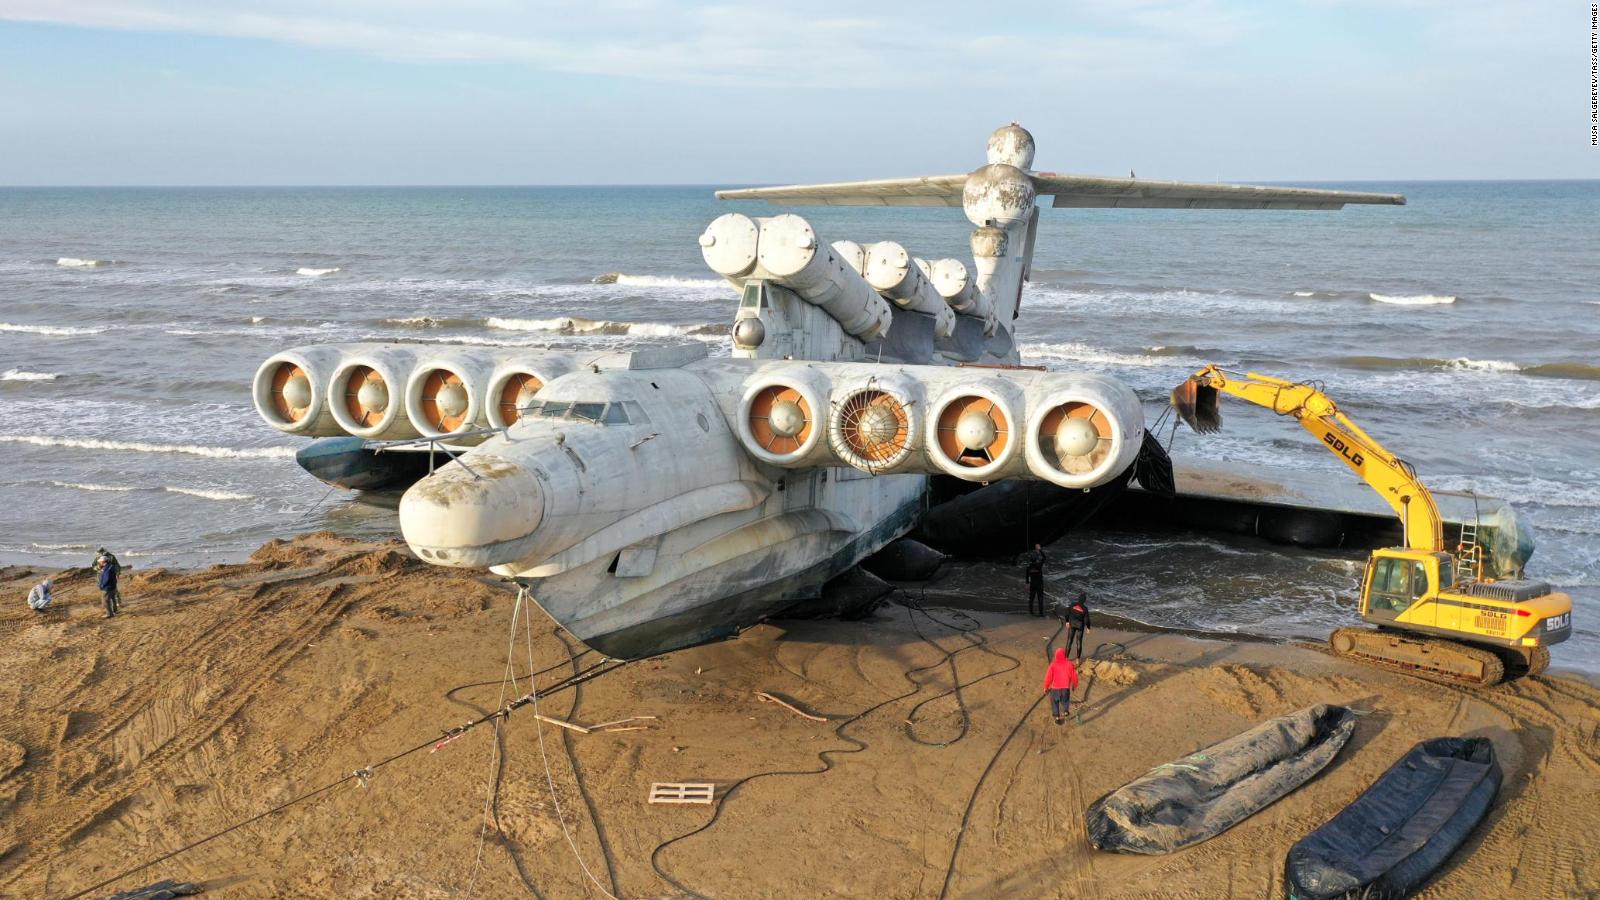 See The Soviet Era Ekranoplan The 'Caspian Sea Monster' Airplane (photos)